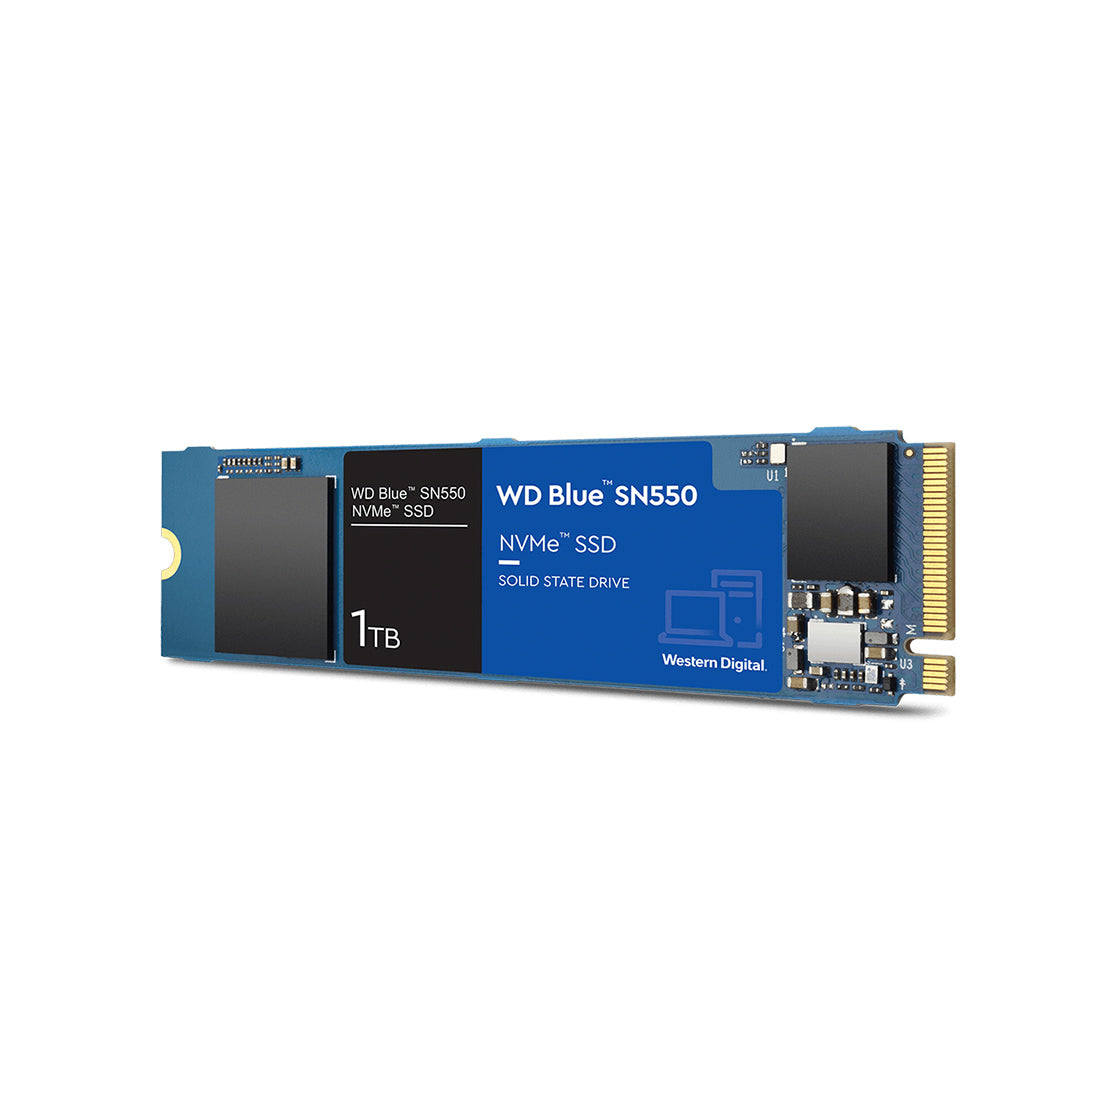 वेस्टर्न डिजिटल ब्लू SN550 1TB M.2 2280 PCIe NVMe इंटरनल SSD